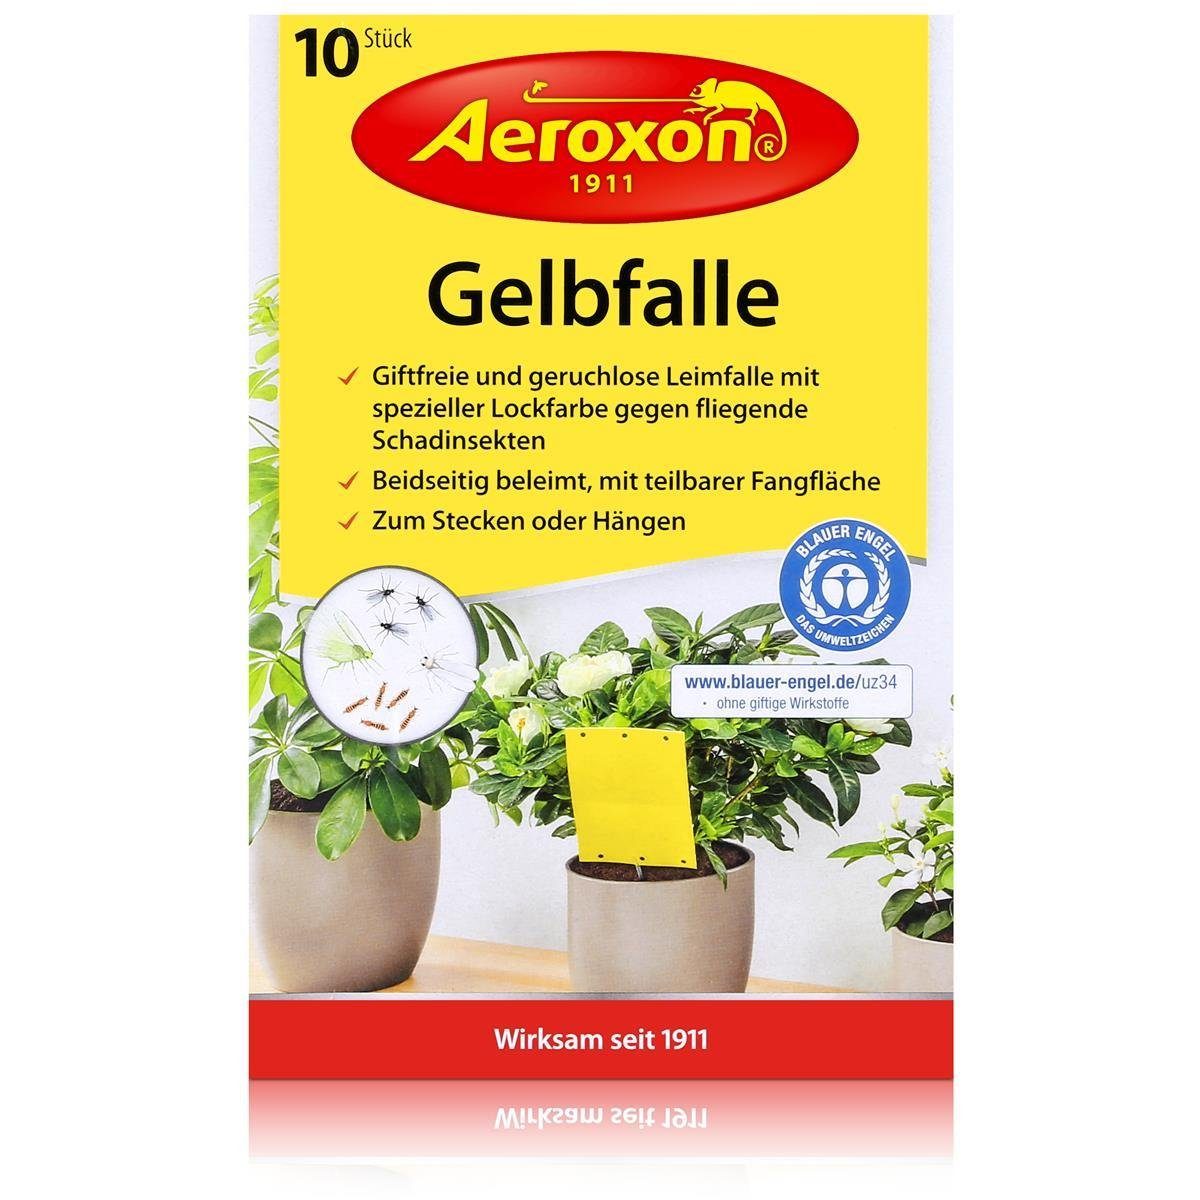 Aeroxon Insektenfalle Aeroxon Gelbfalle 10 Stück - Gegen fliegende Schadinsekten (1er Pack)